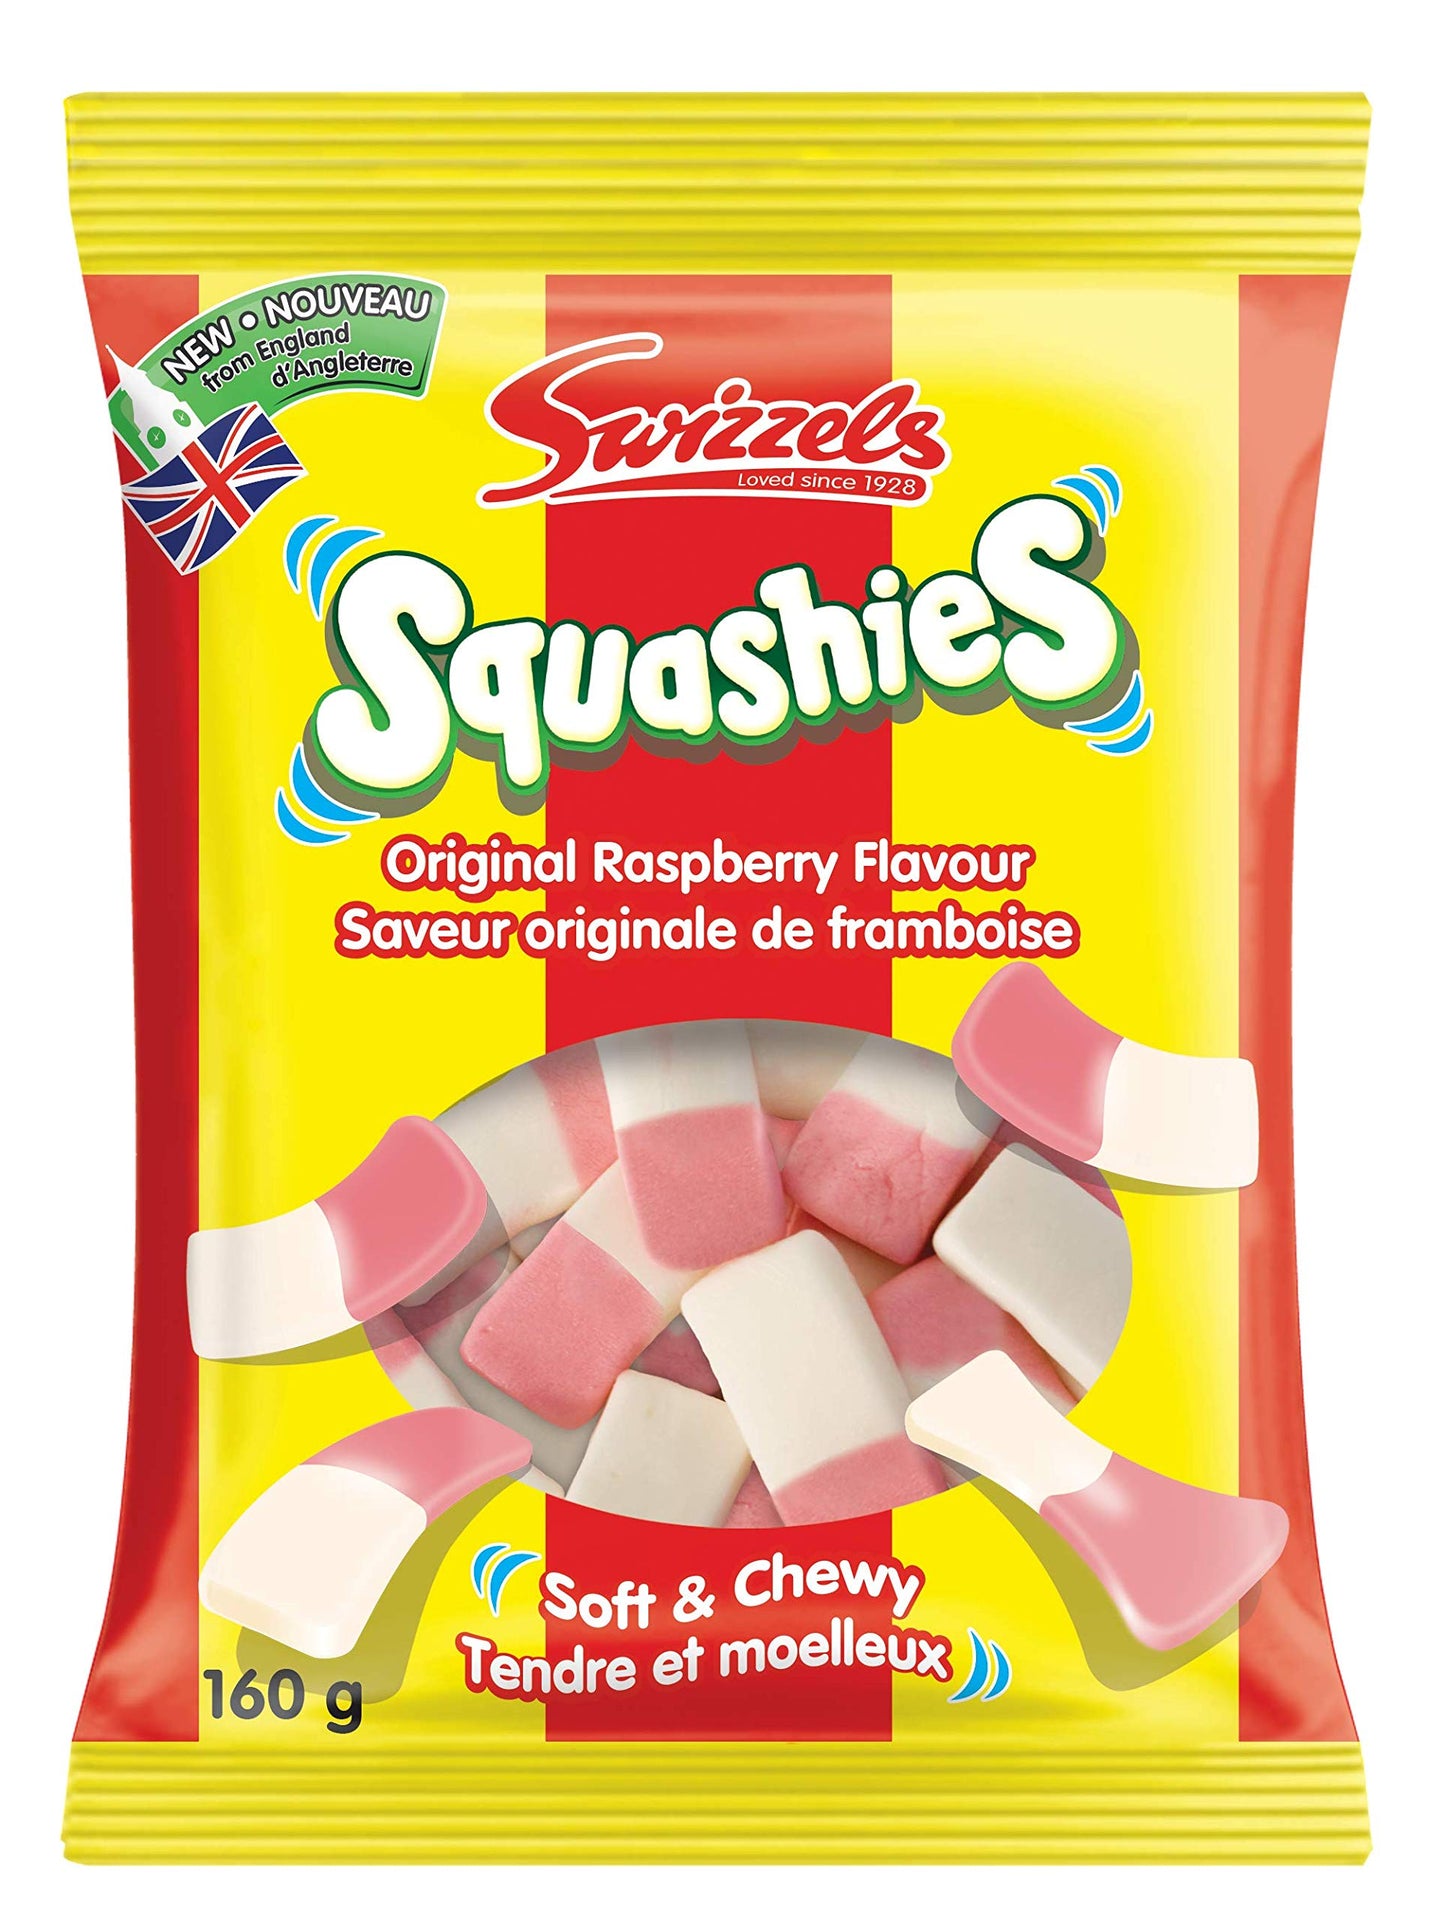 Swizzels Squashies Original Raspberry Flavour - 160g